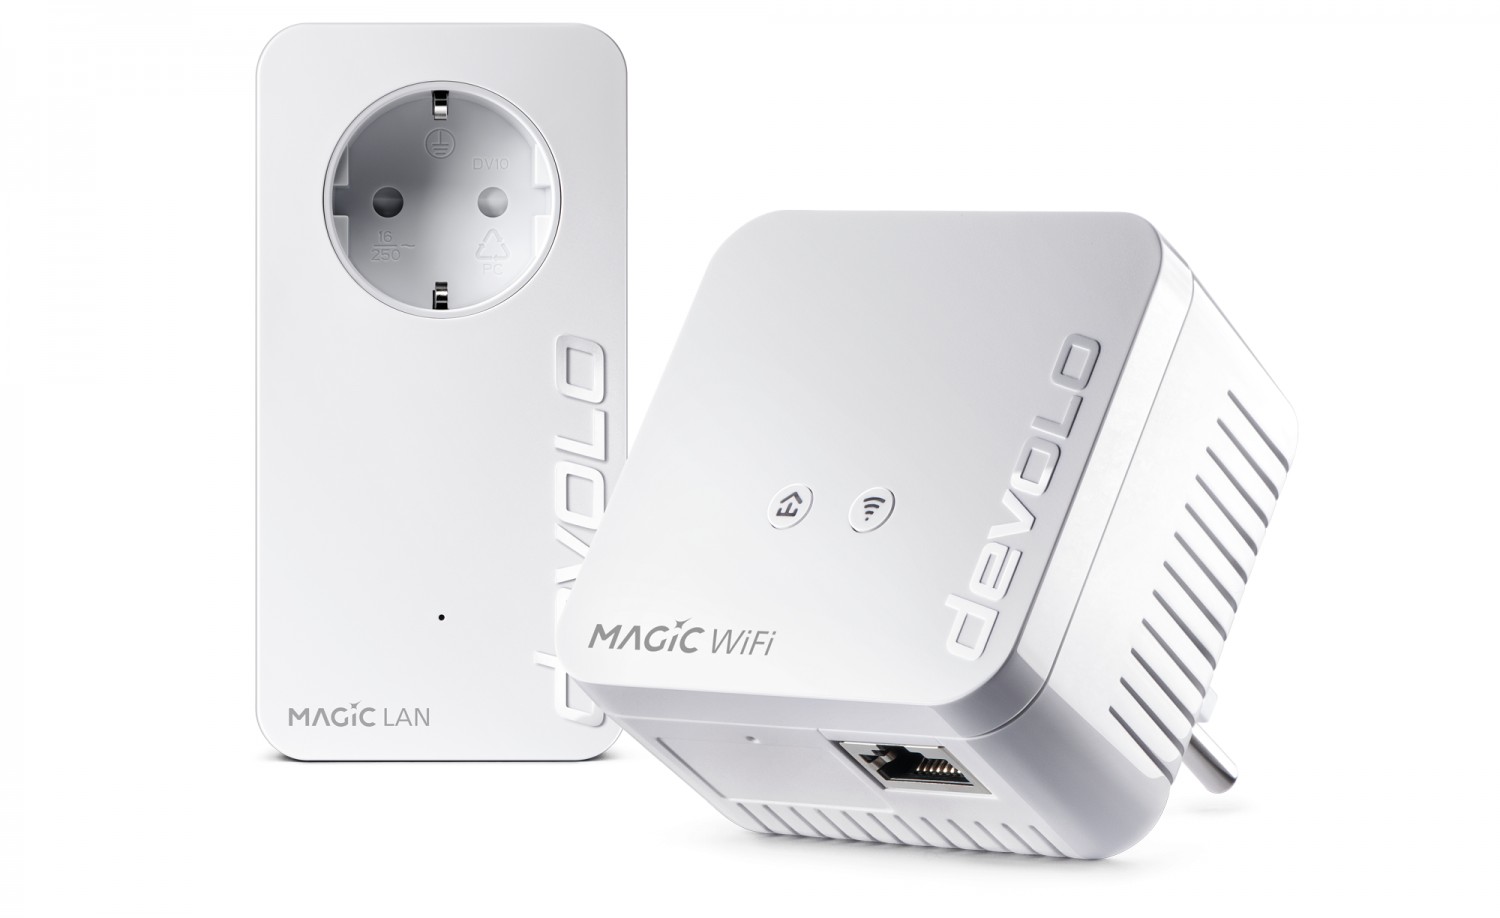 Produktvorstellung Extrem kompakt: Devolo mit neuem Powerline-Adapter Magic 1 WiFi mini - News, Bild 1